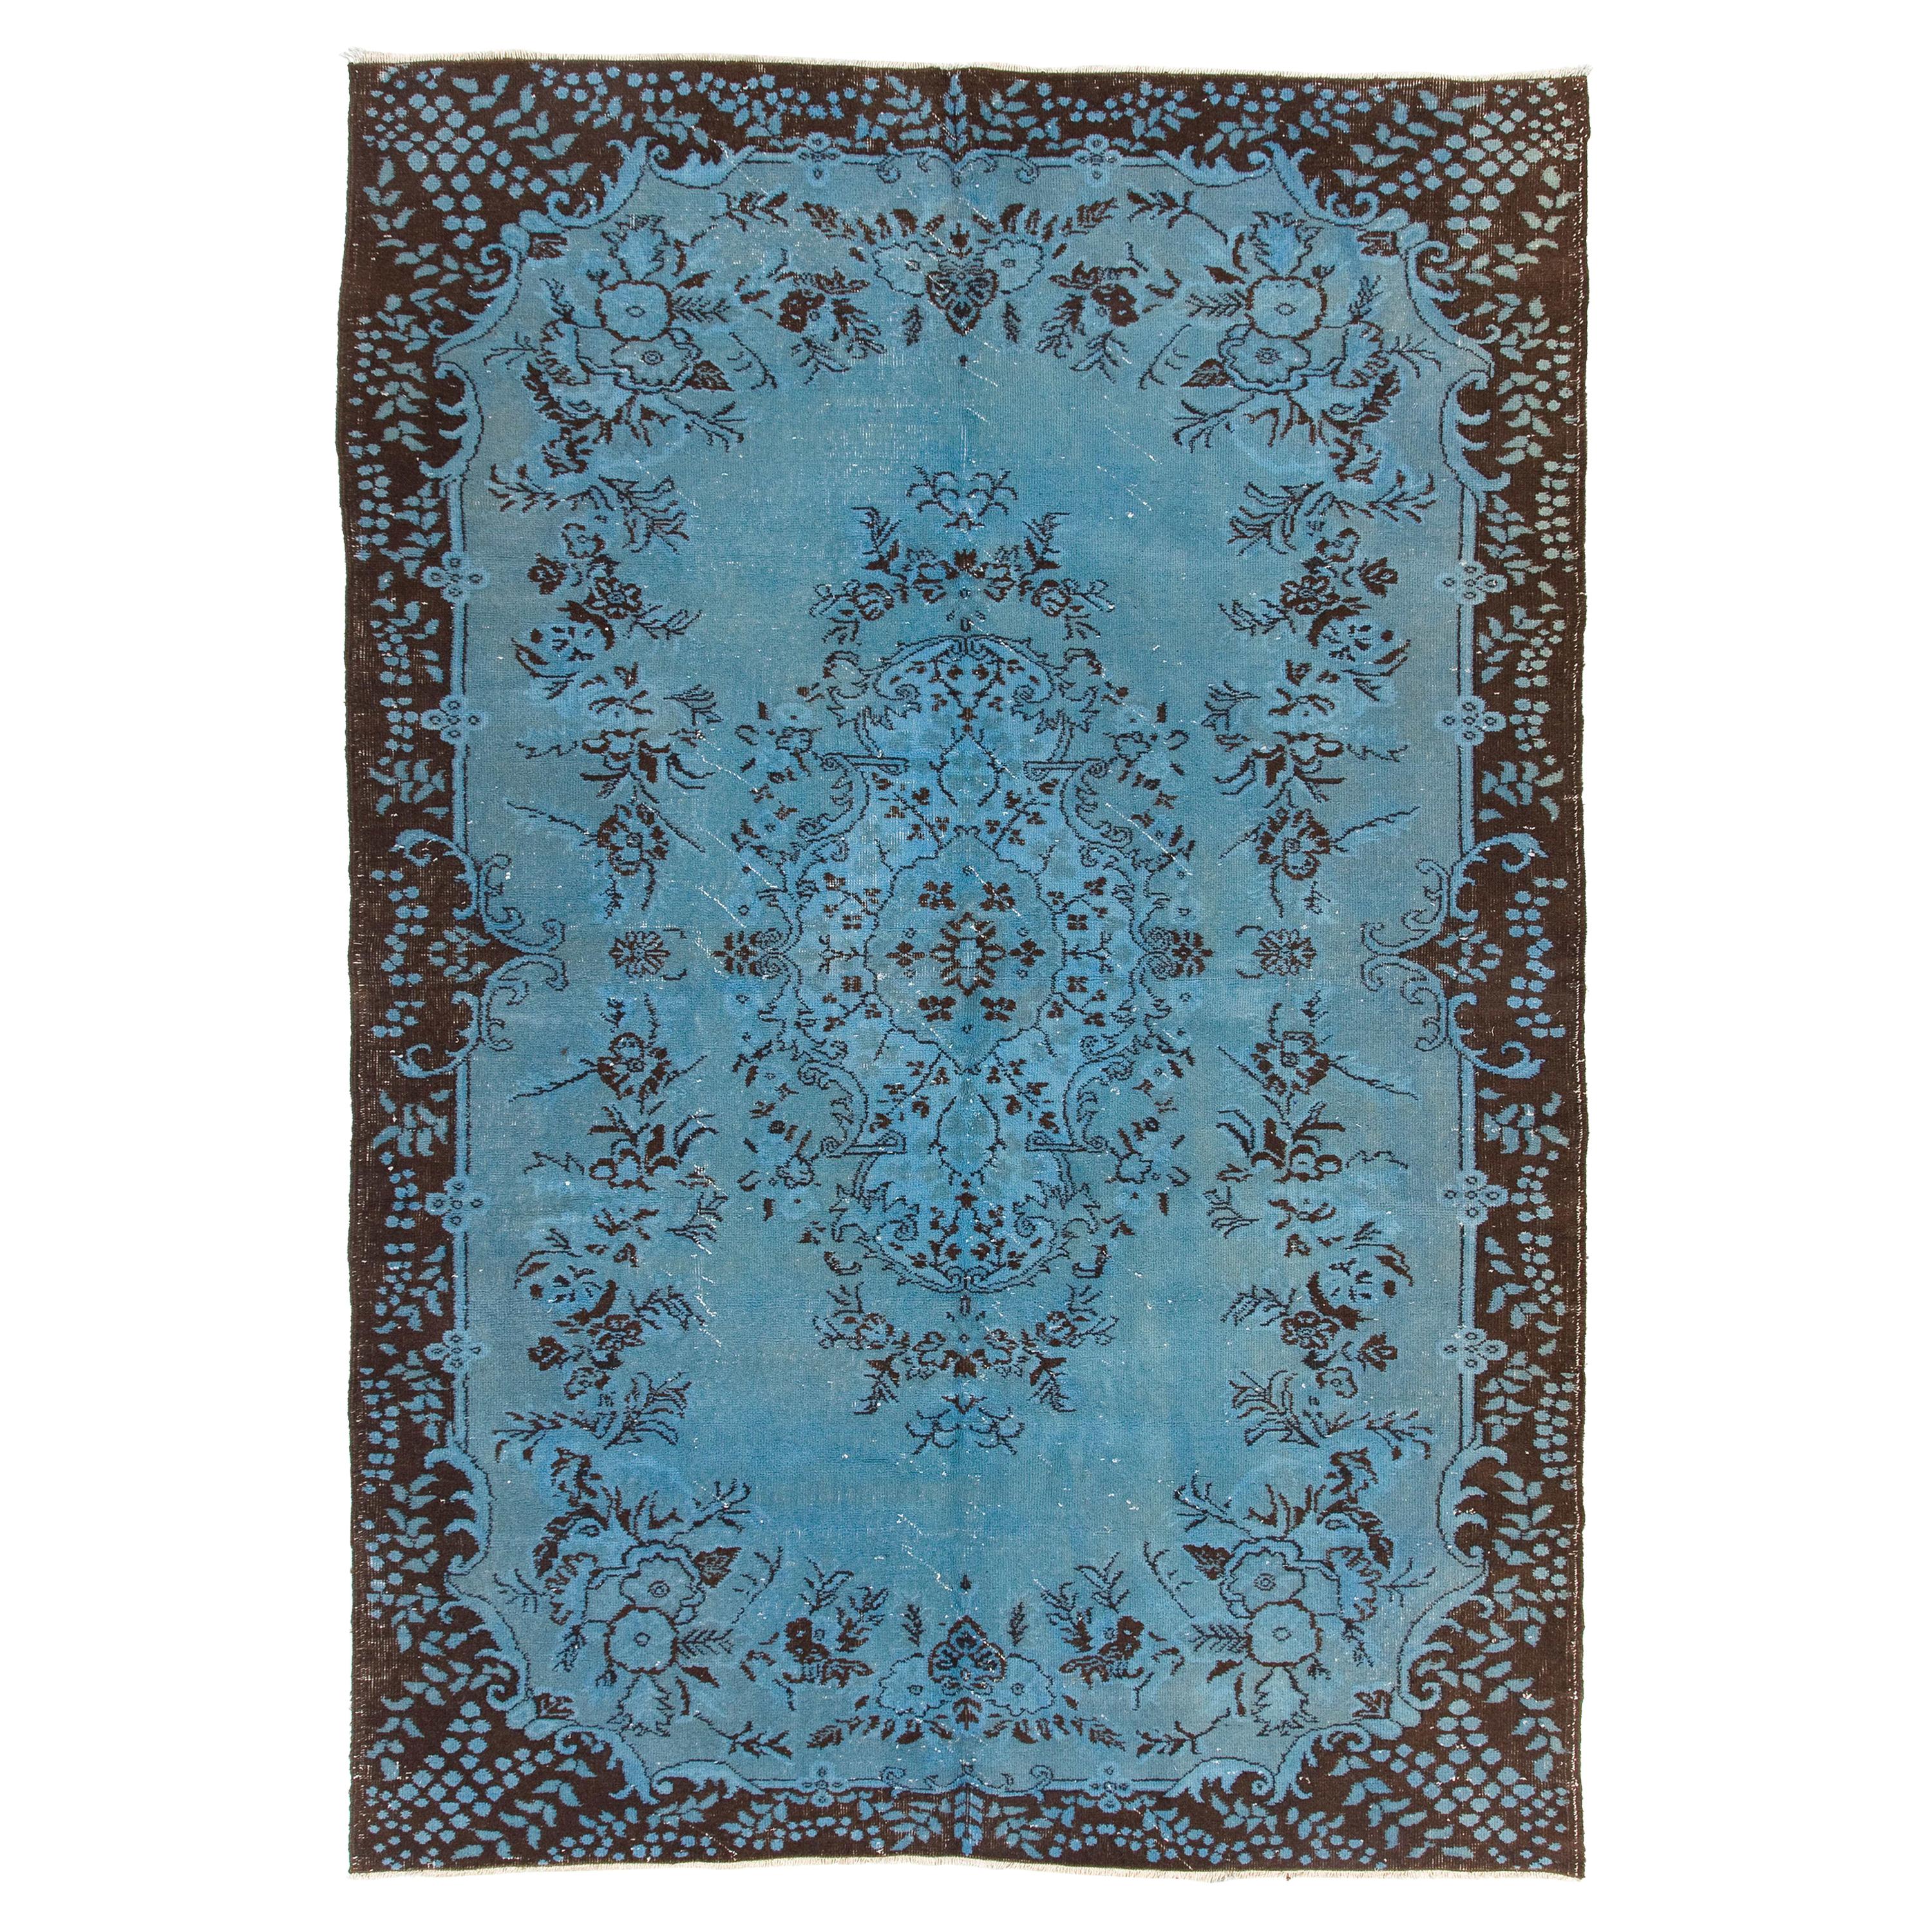 Hand Knotted Vintage Turkish Wool Rug. 6.8x9.7 Ft. Modern Carpet in Light Blue